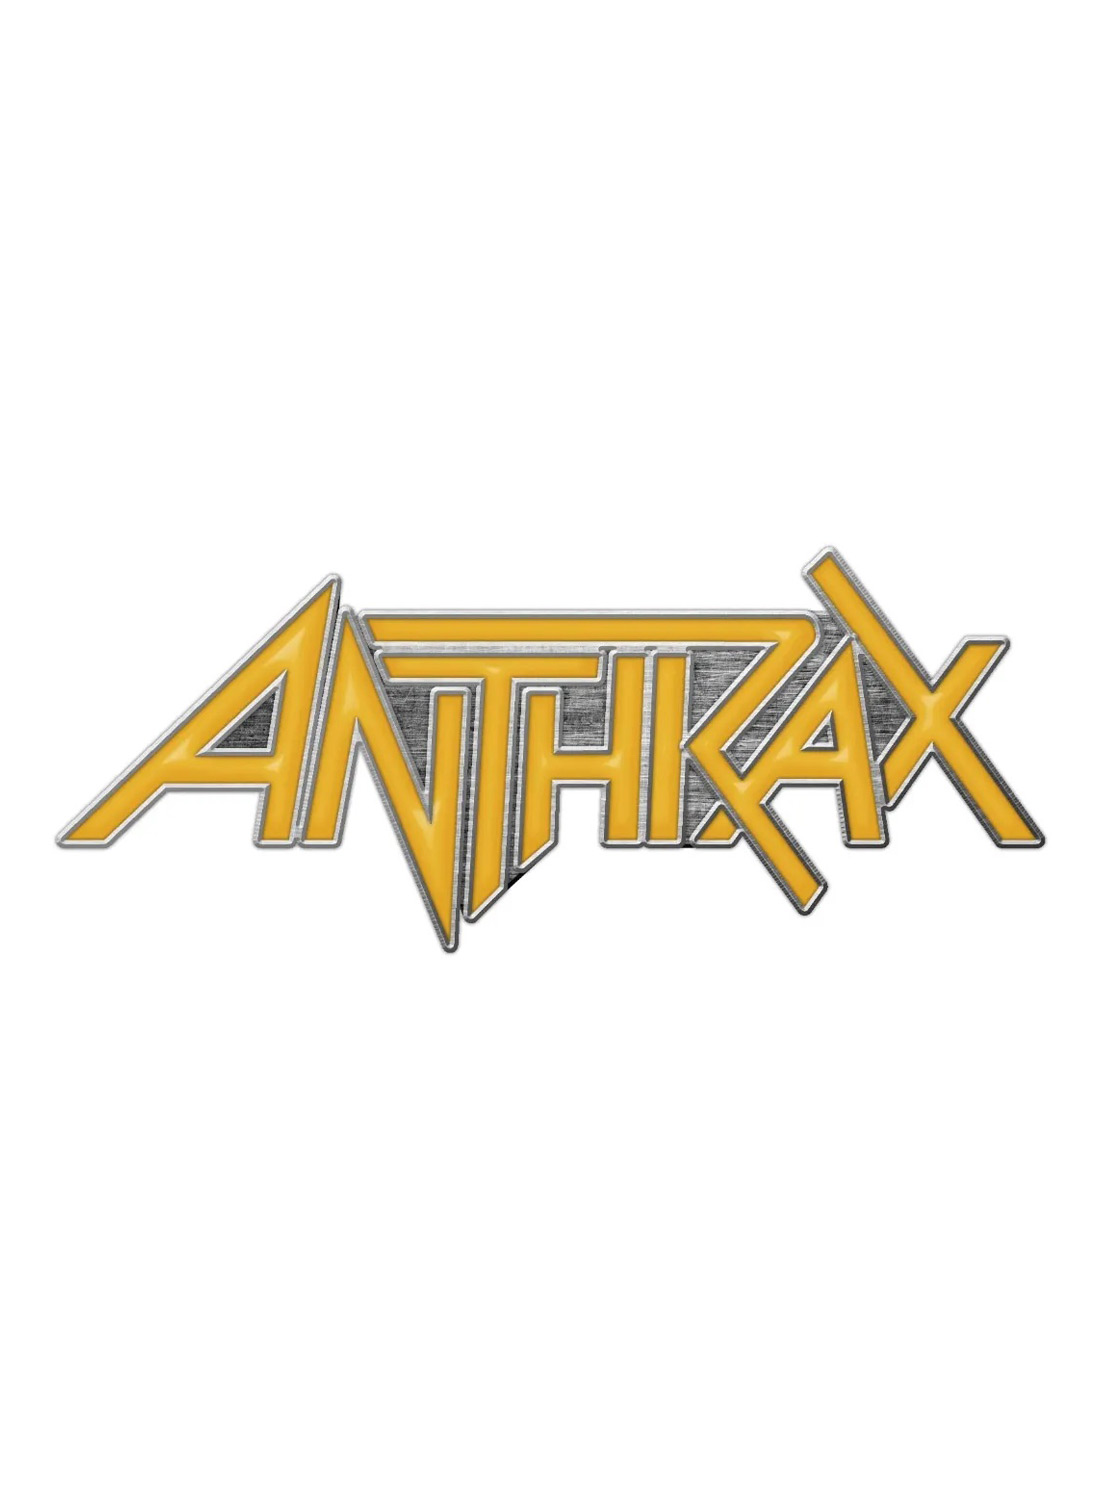 Anthrax Metal Pin Badge